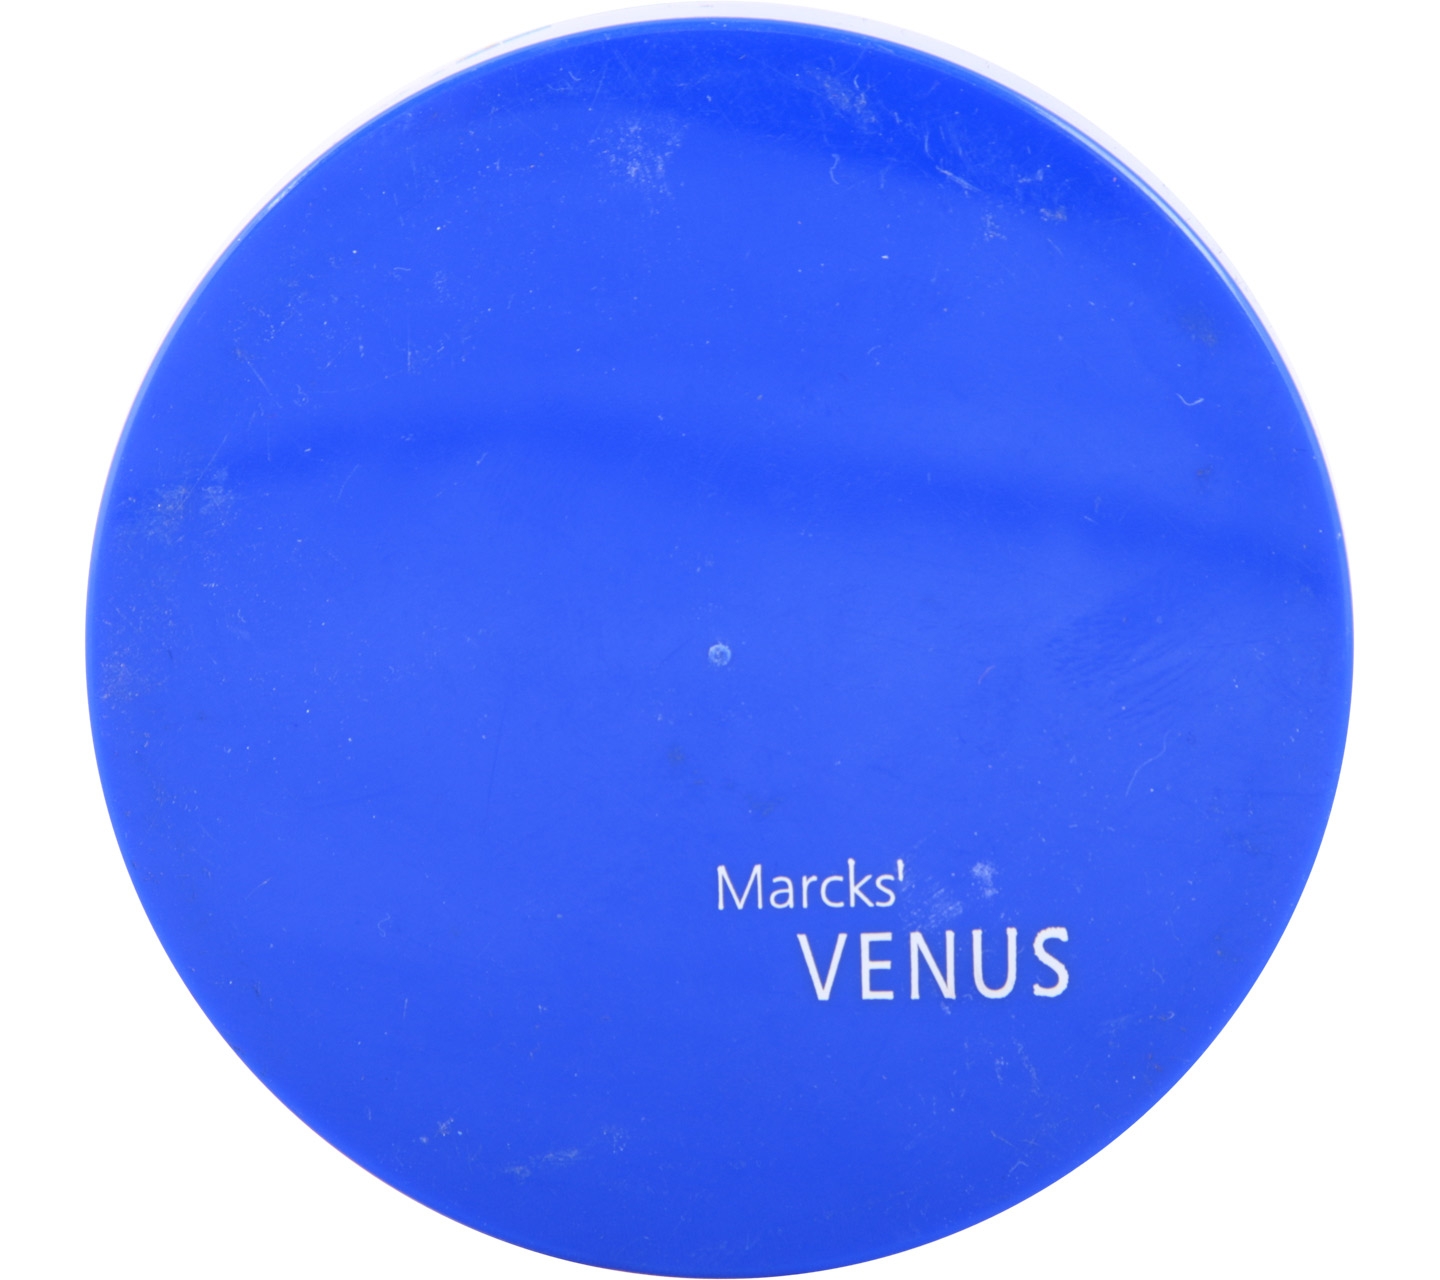 Marck Venus 01 Invisible Loose Powder Faces